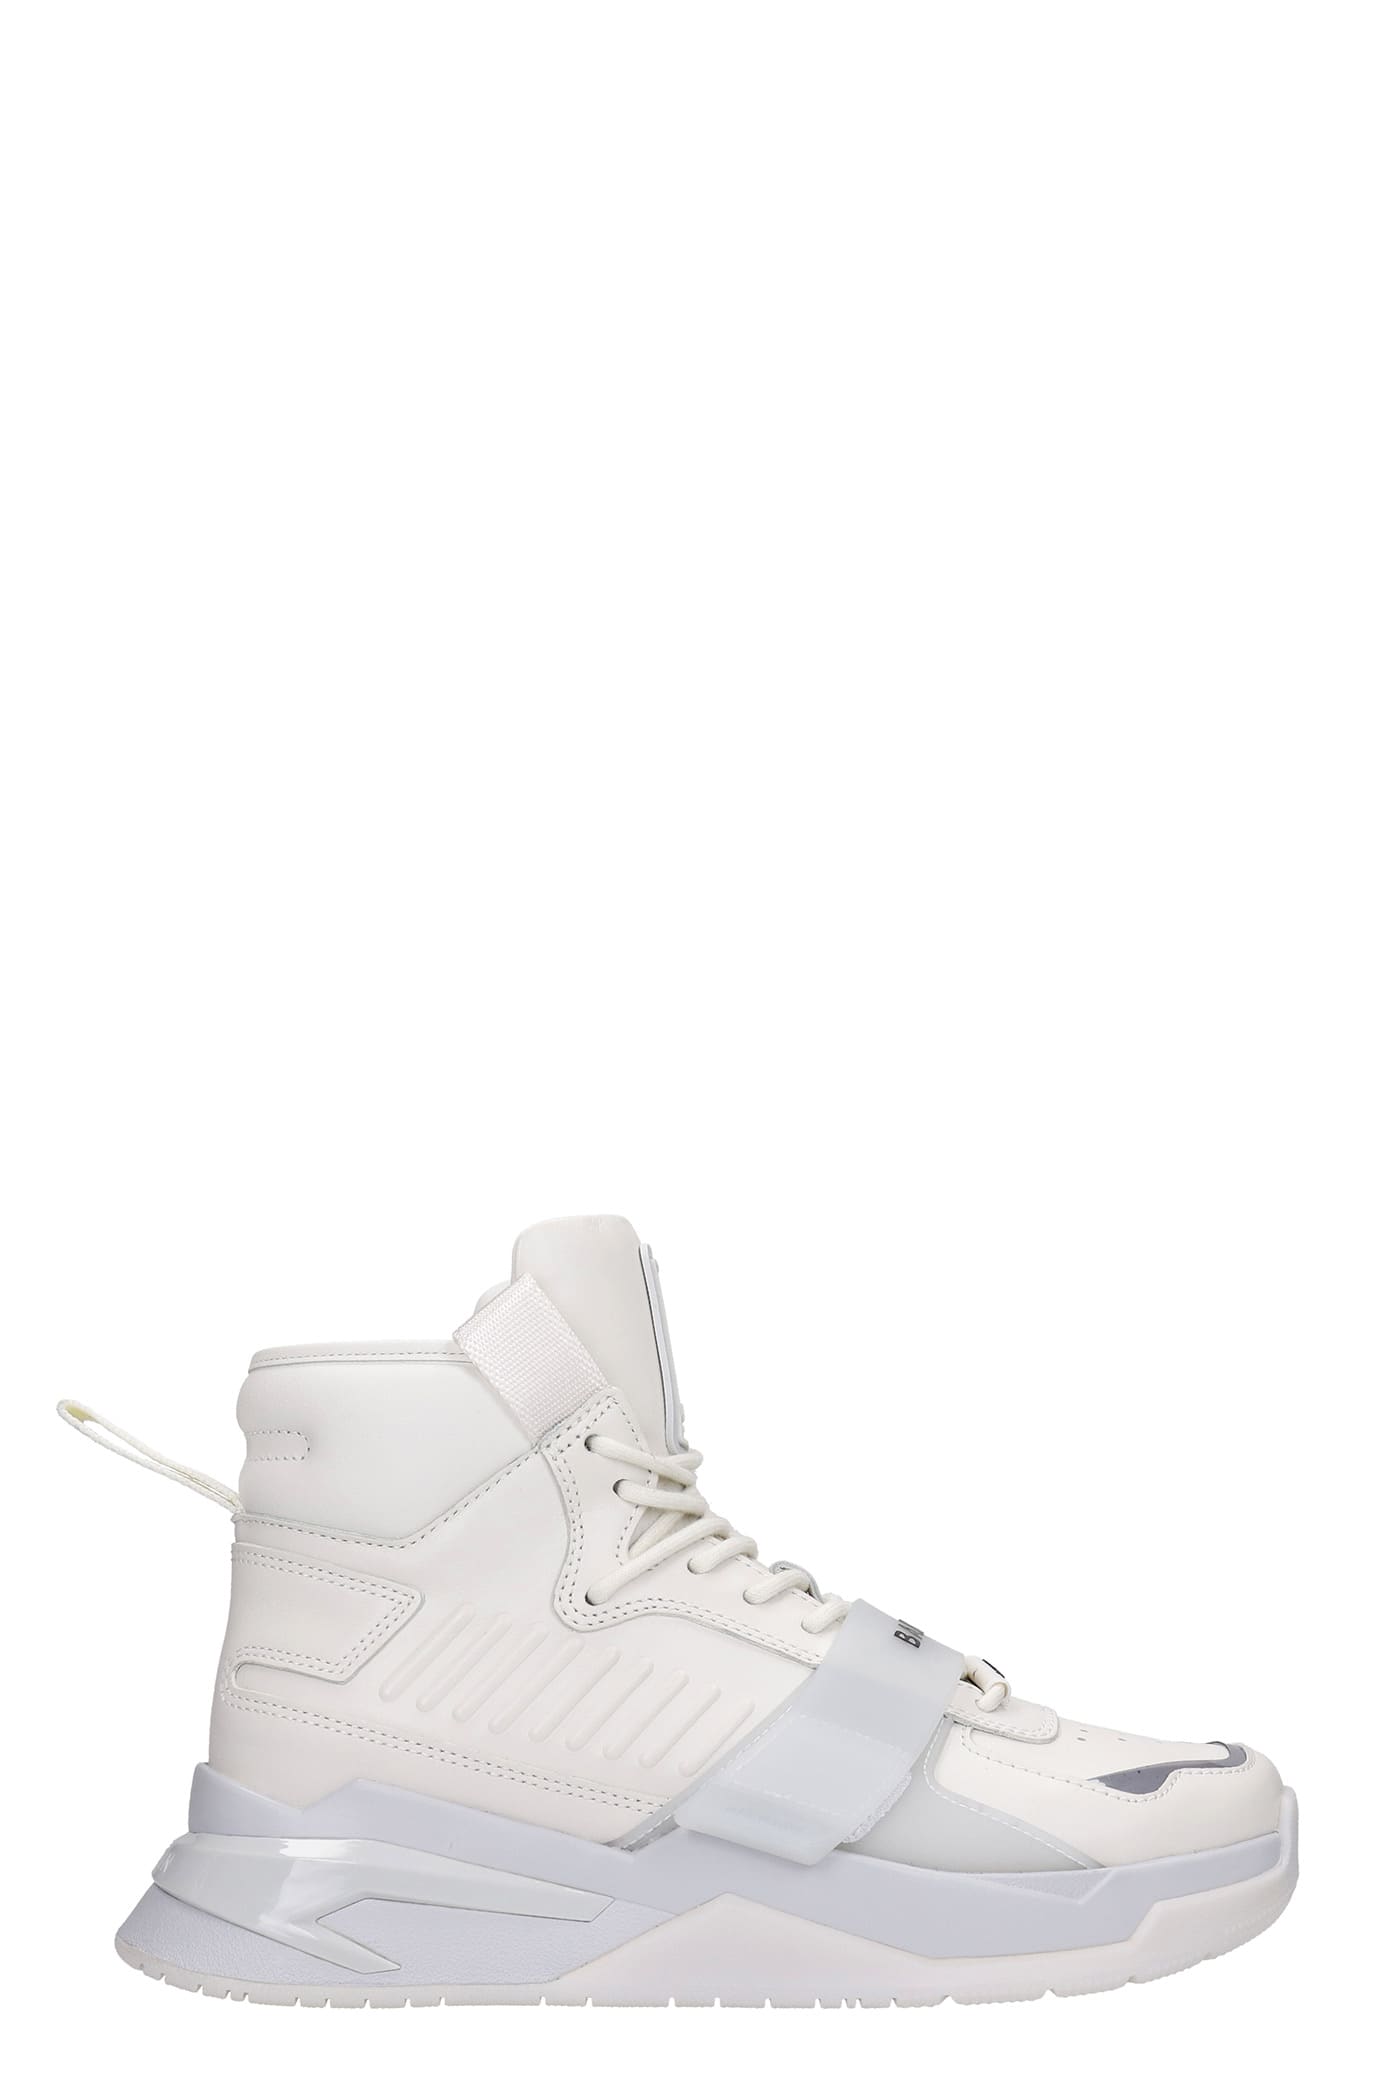 Balmain B-ball Strap Sneakers In White Leather